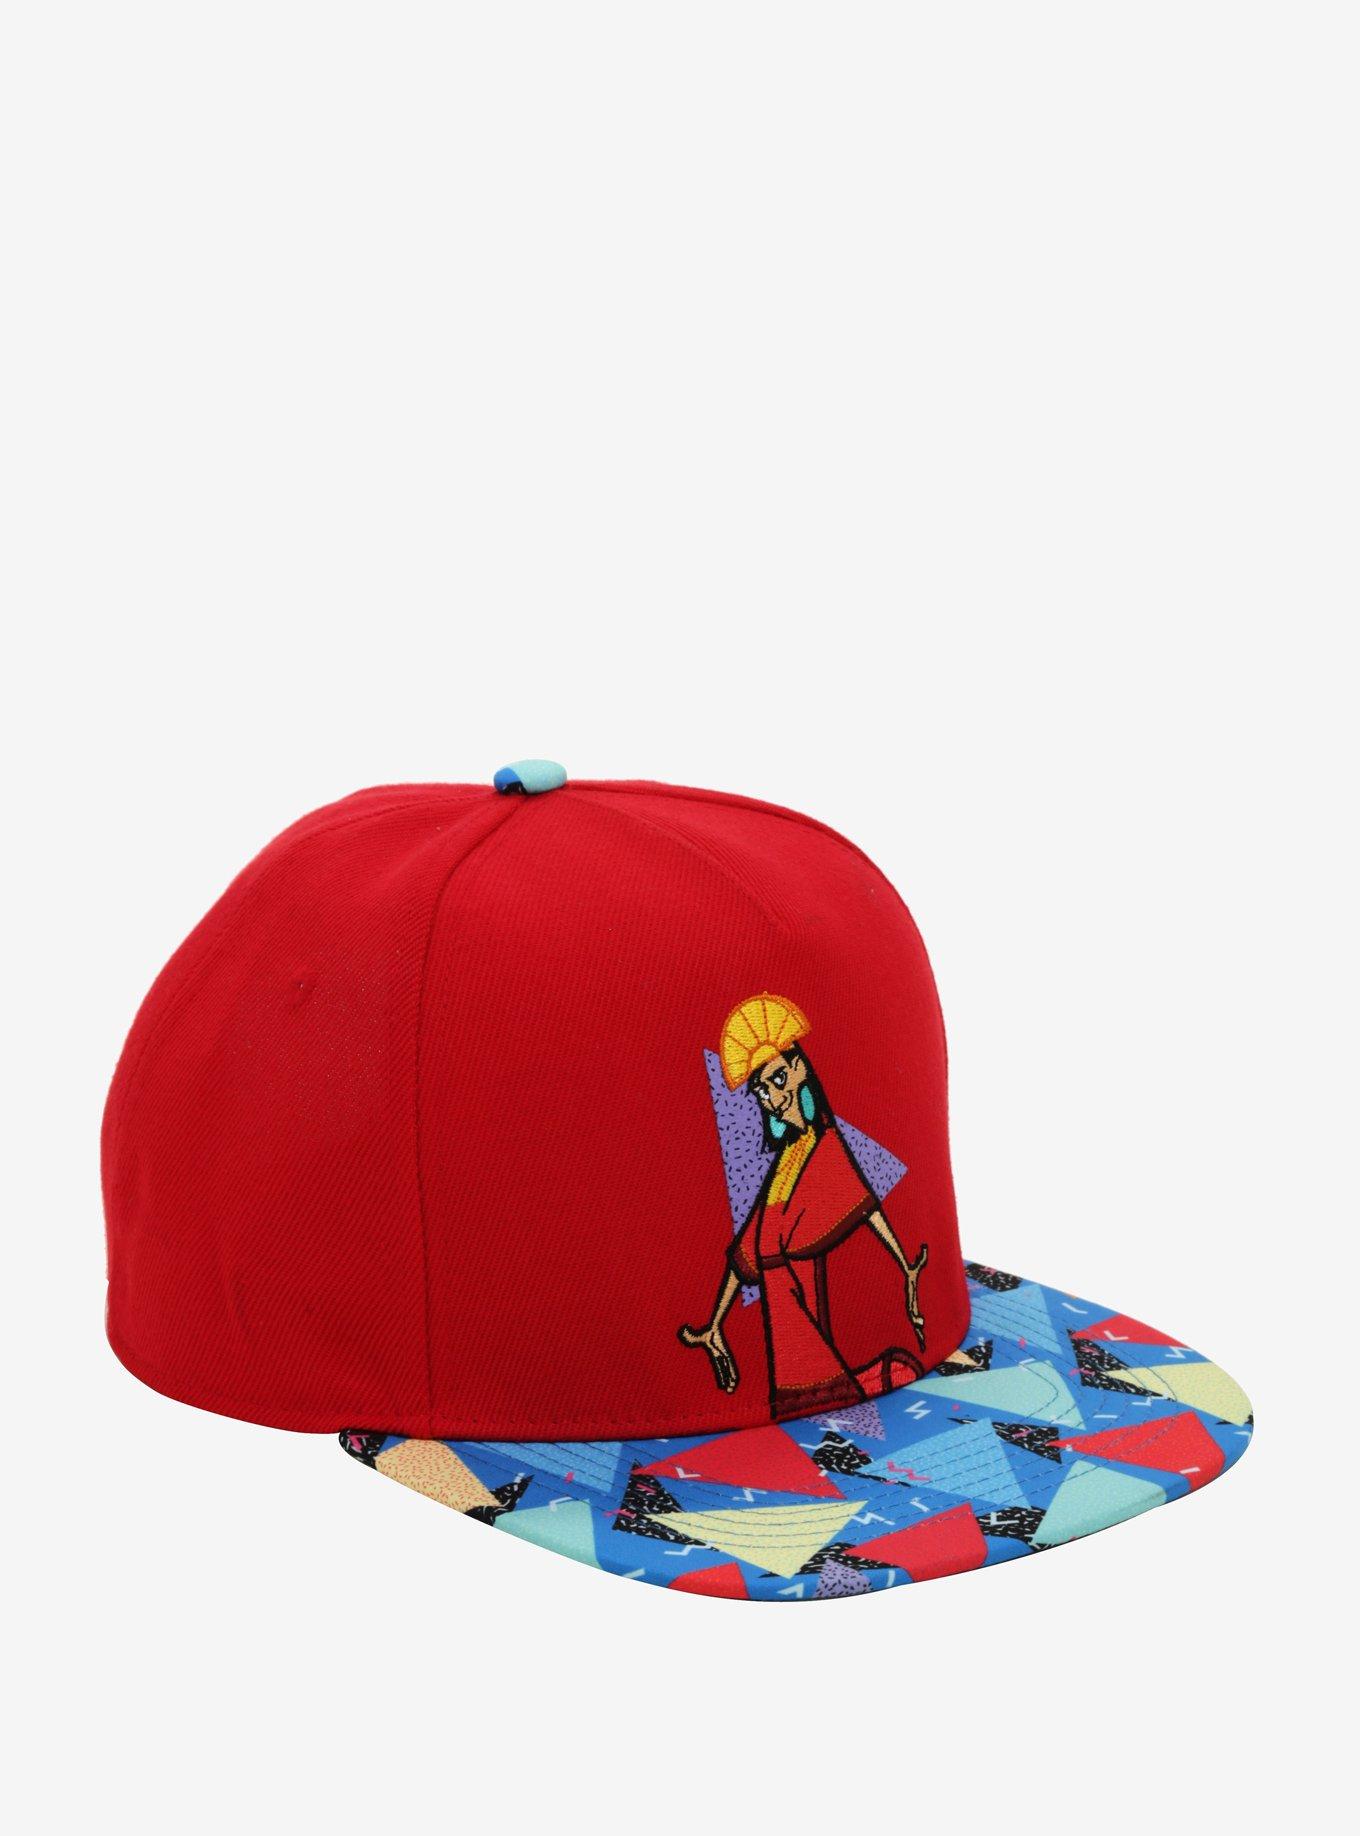 Disney The Emperor's New Groove Kuzco Snapback Hat, , hi-res